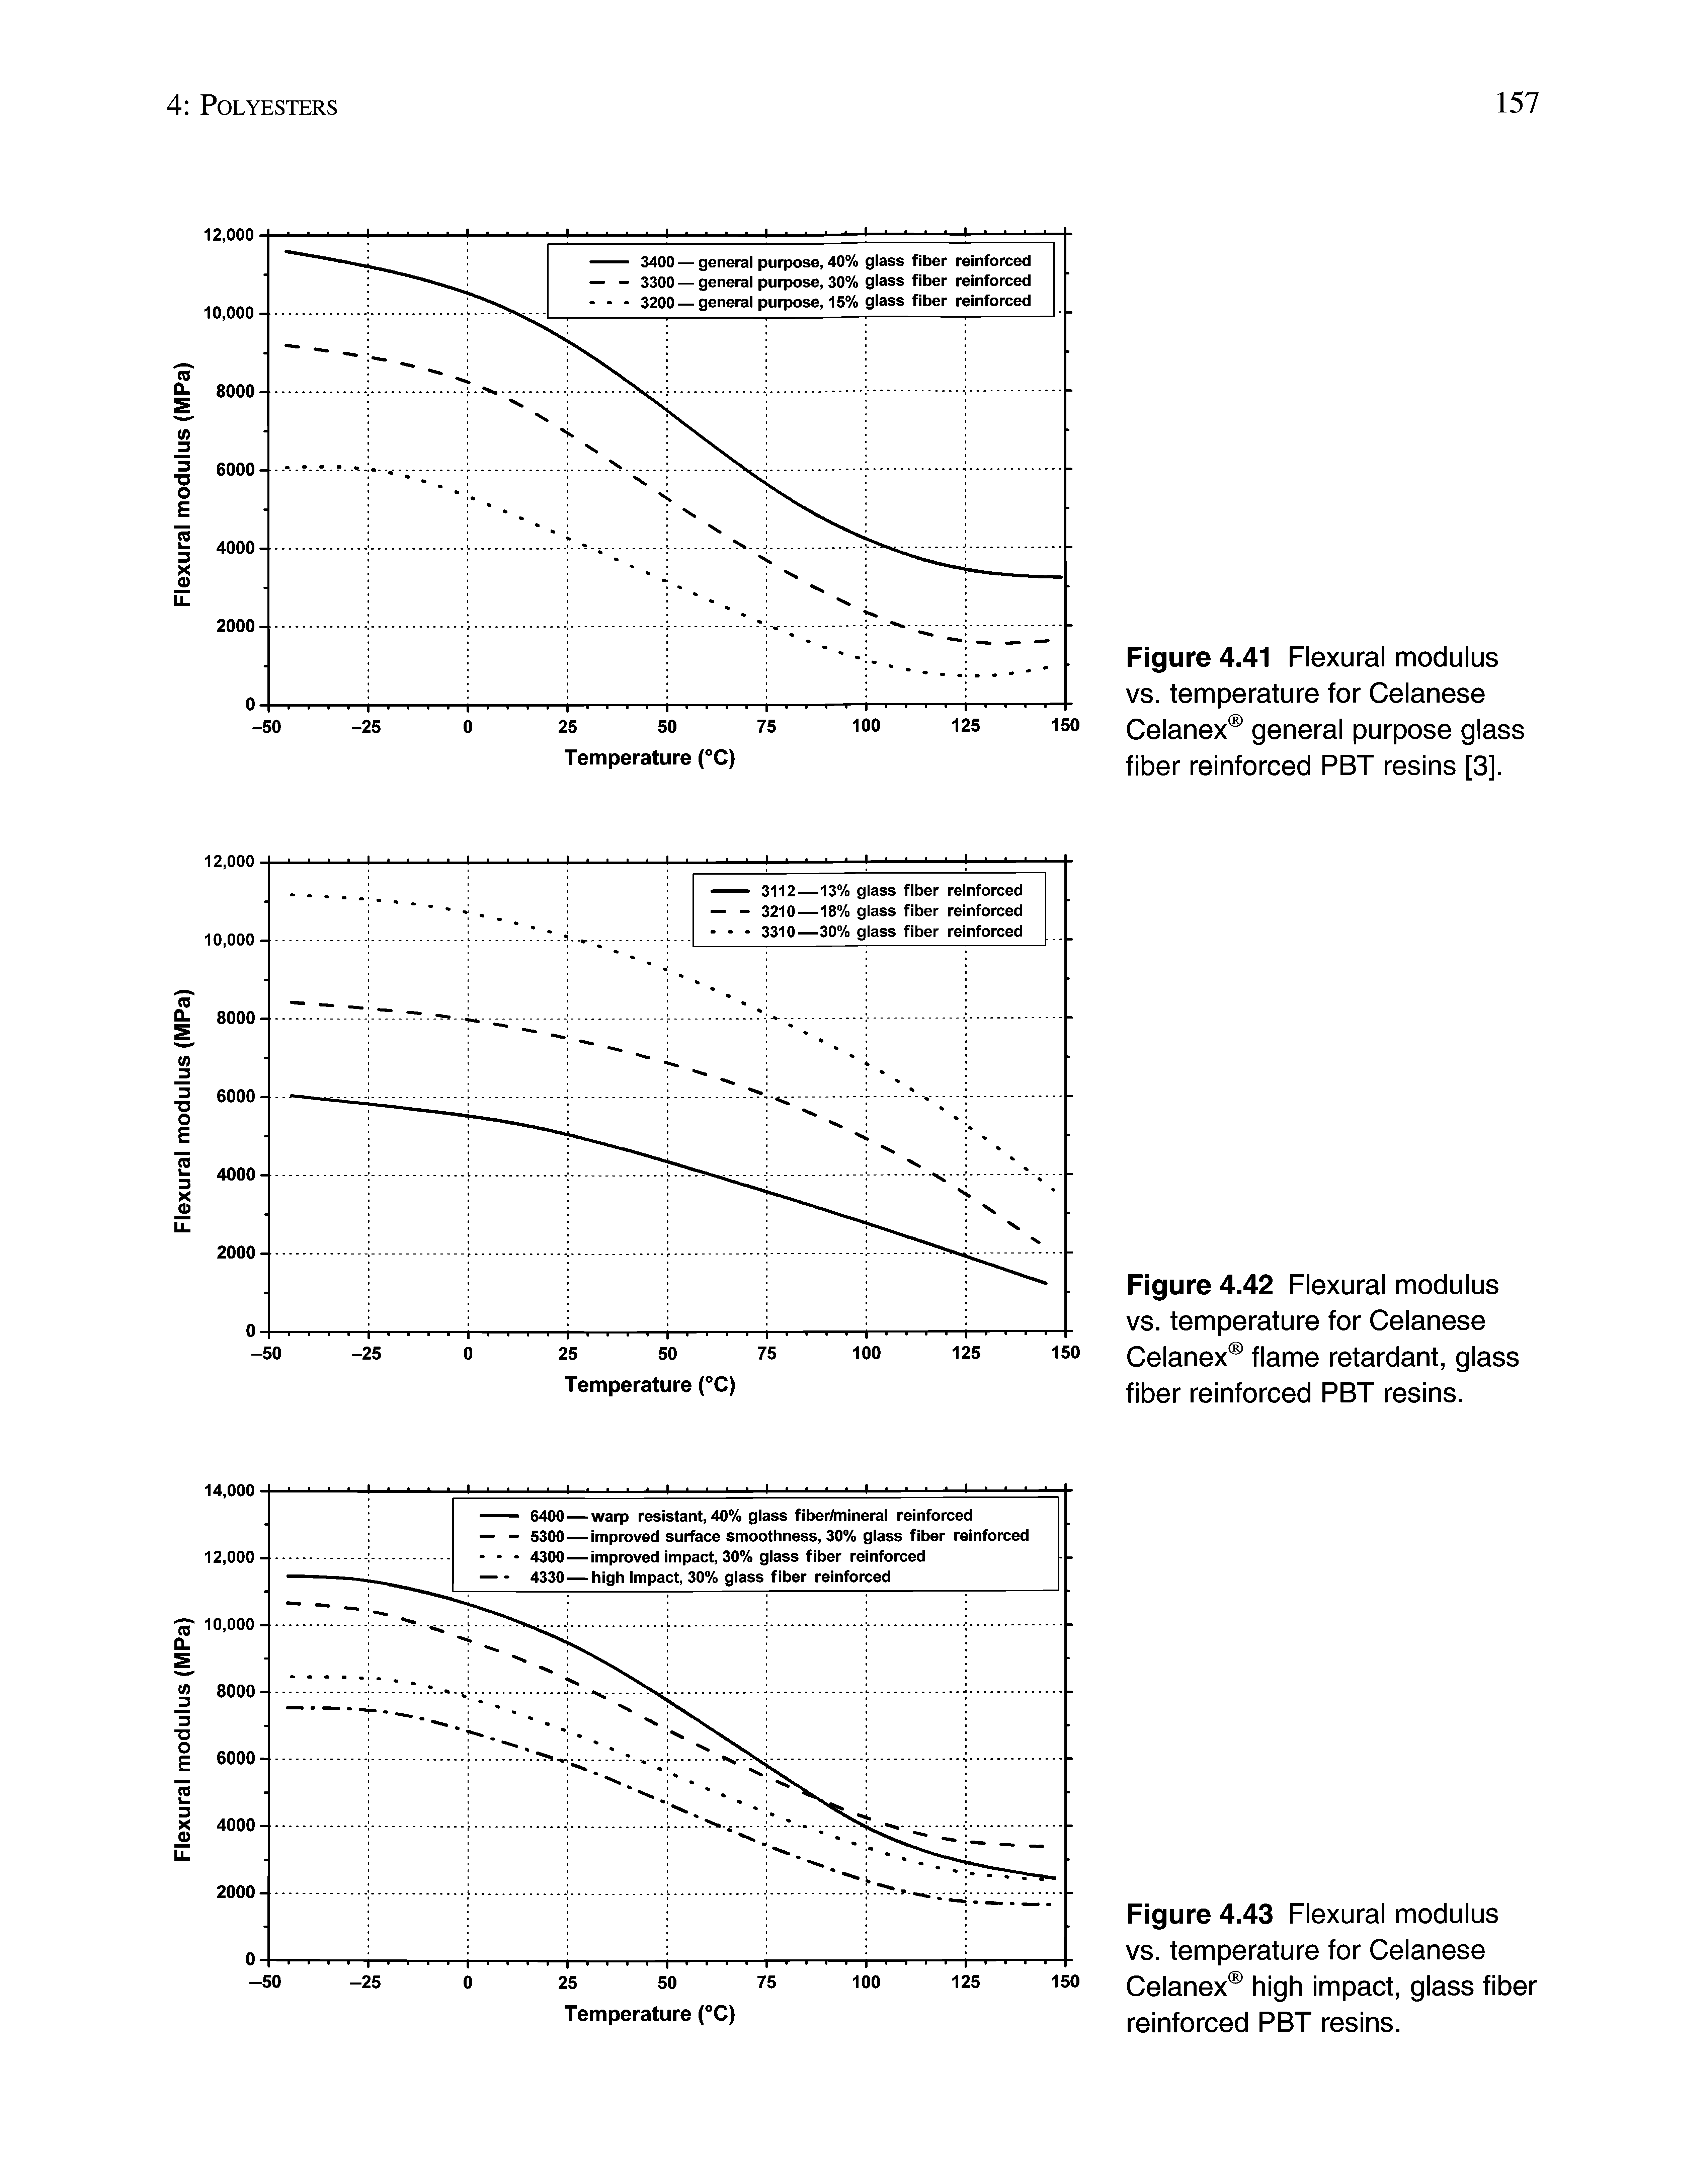 Figure 4.41 Flexural modulus vs. temperature for Celanese Celanex general purpose glass fiber reinforced PBT resins [3].